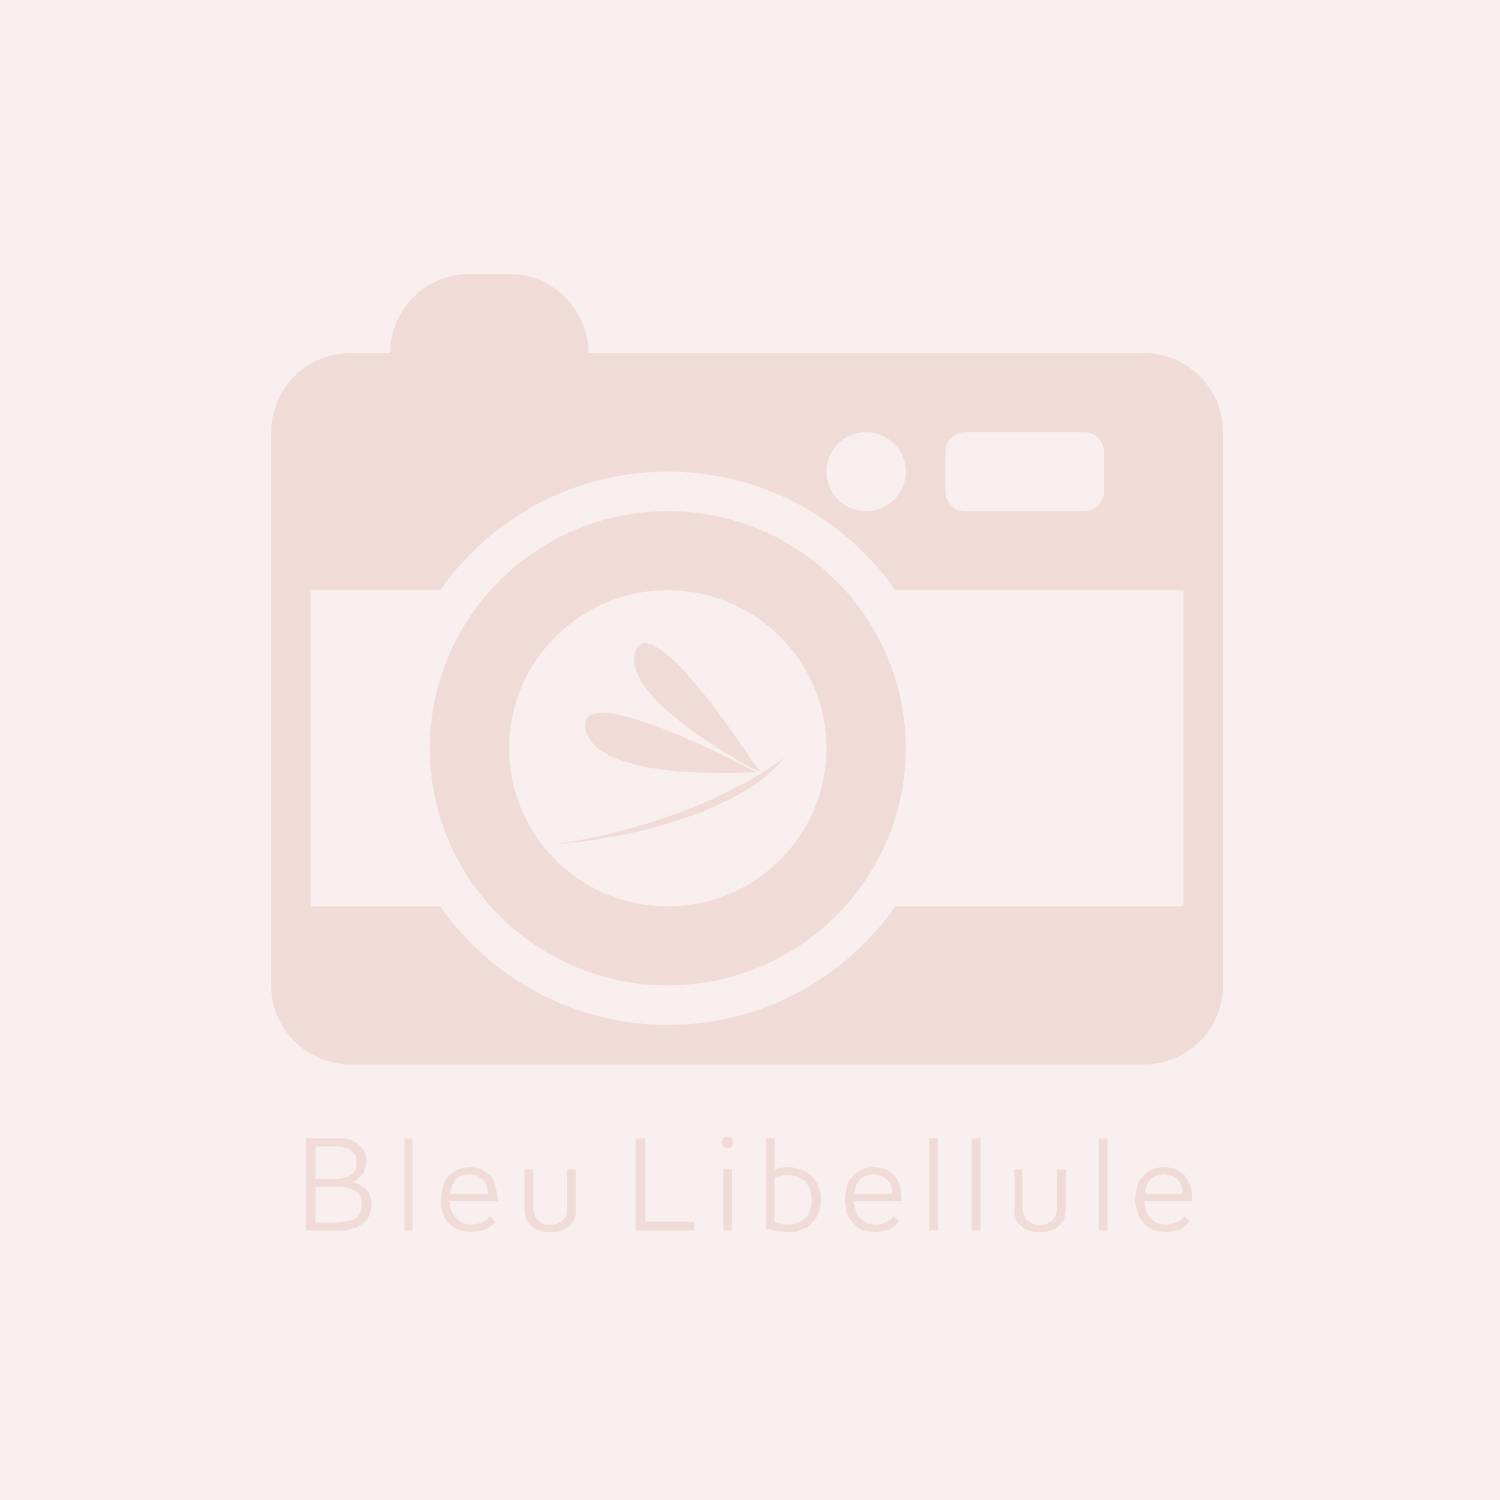 Peggy Sage Mini vernis semi-permanent 1-LAK - Frenchie rose 5ml, Vernis semi-permanent couleur